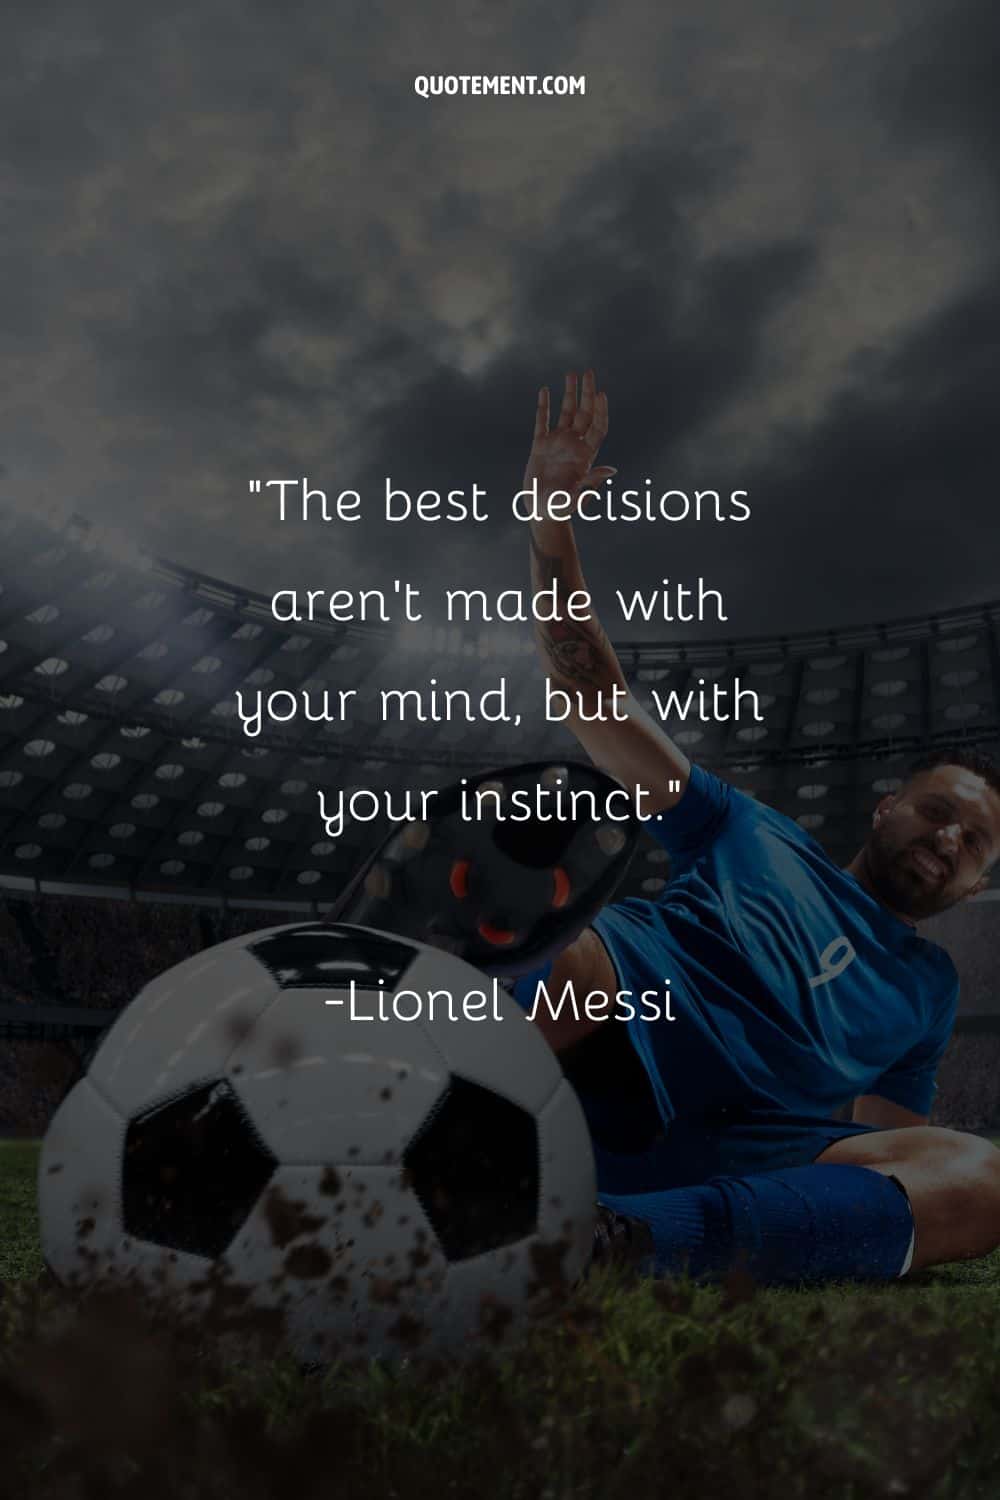 Male footballer's skillful slide in focus representing soccer inspiration quote